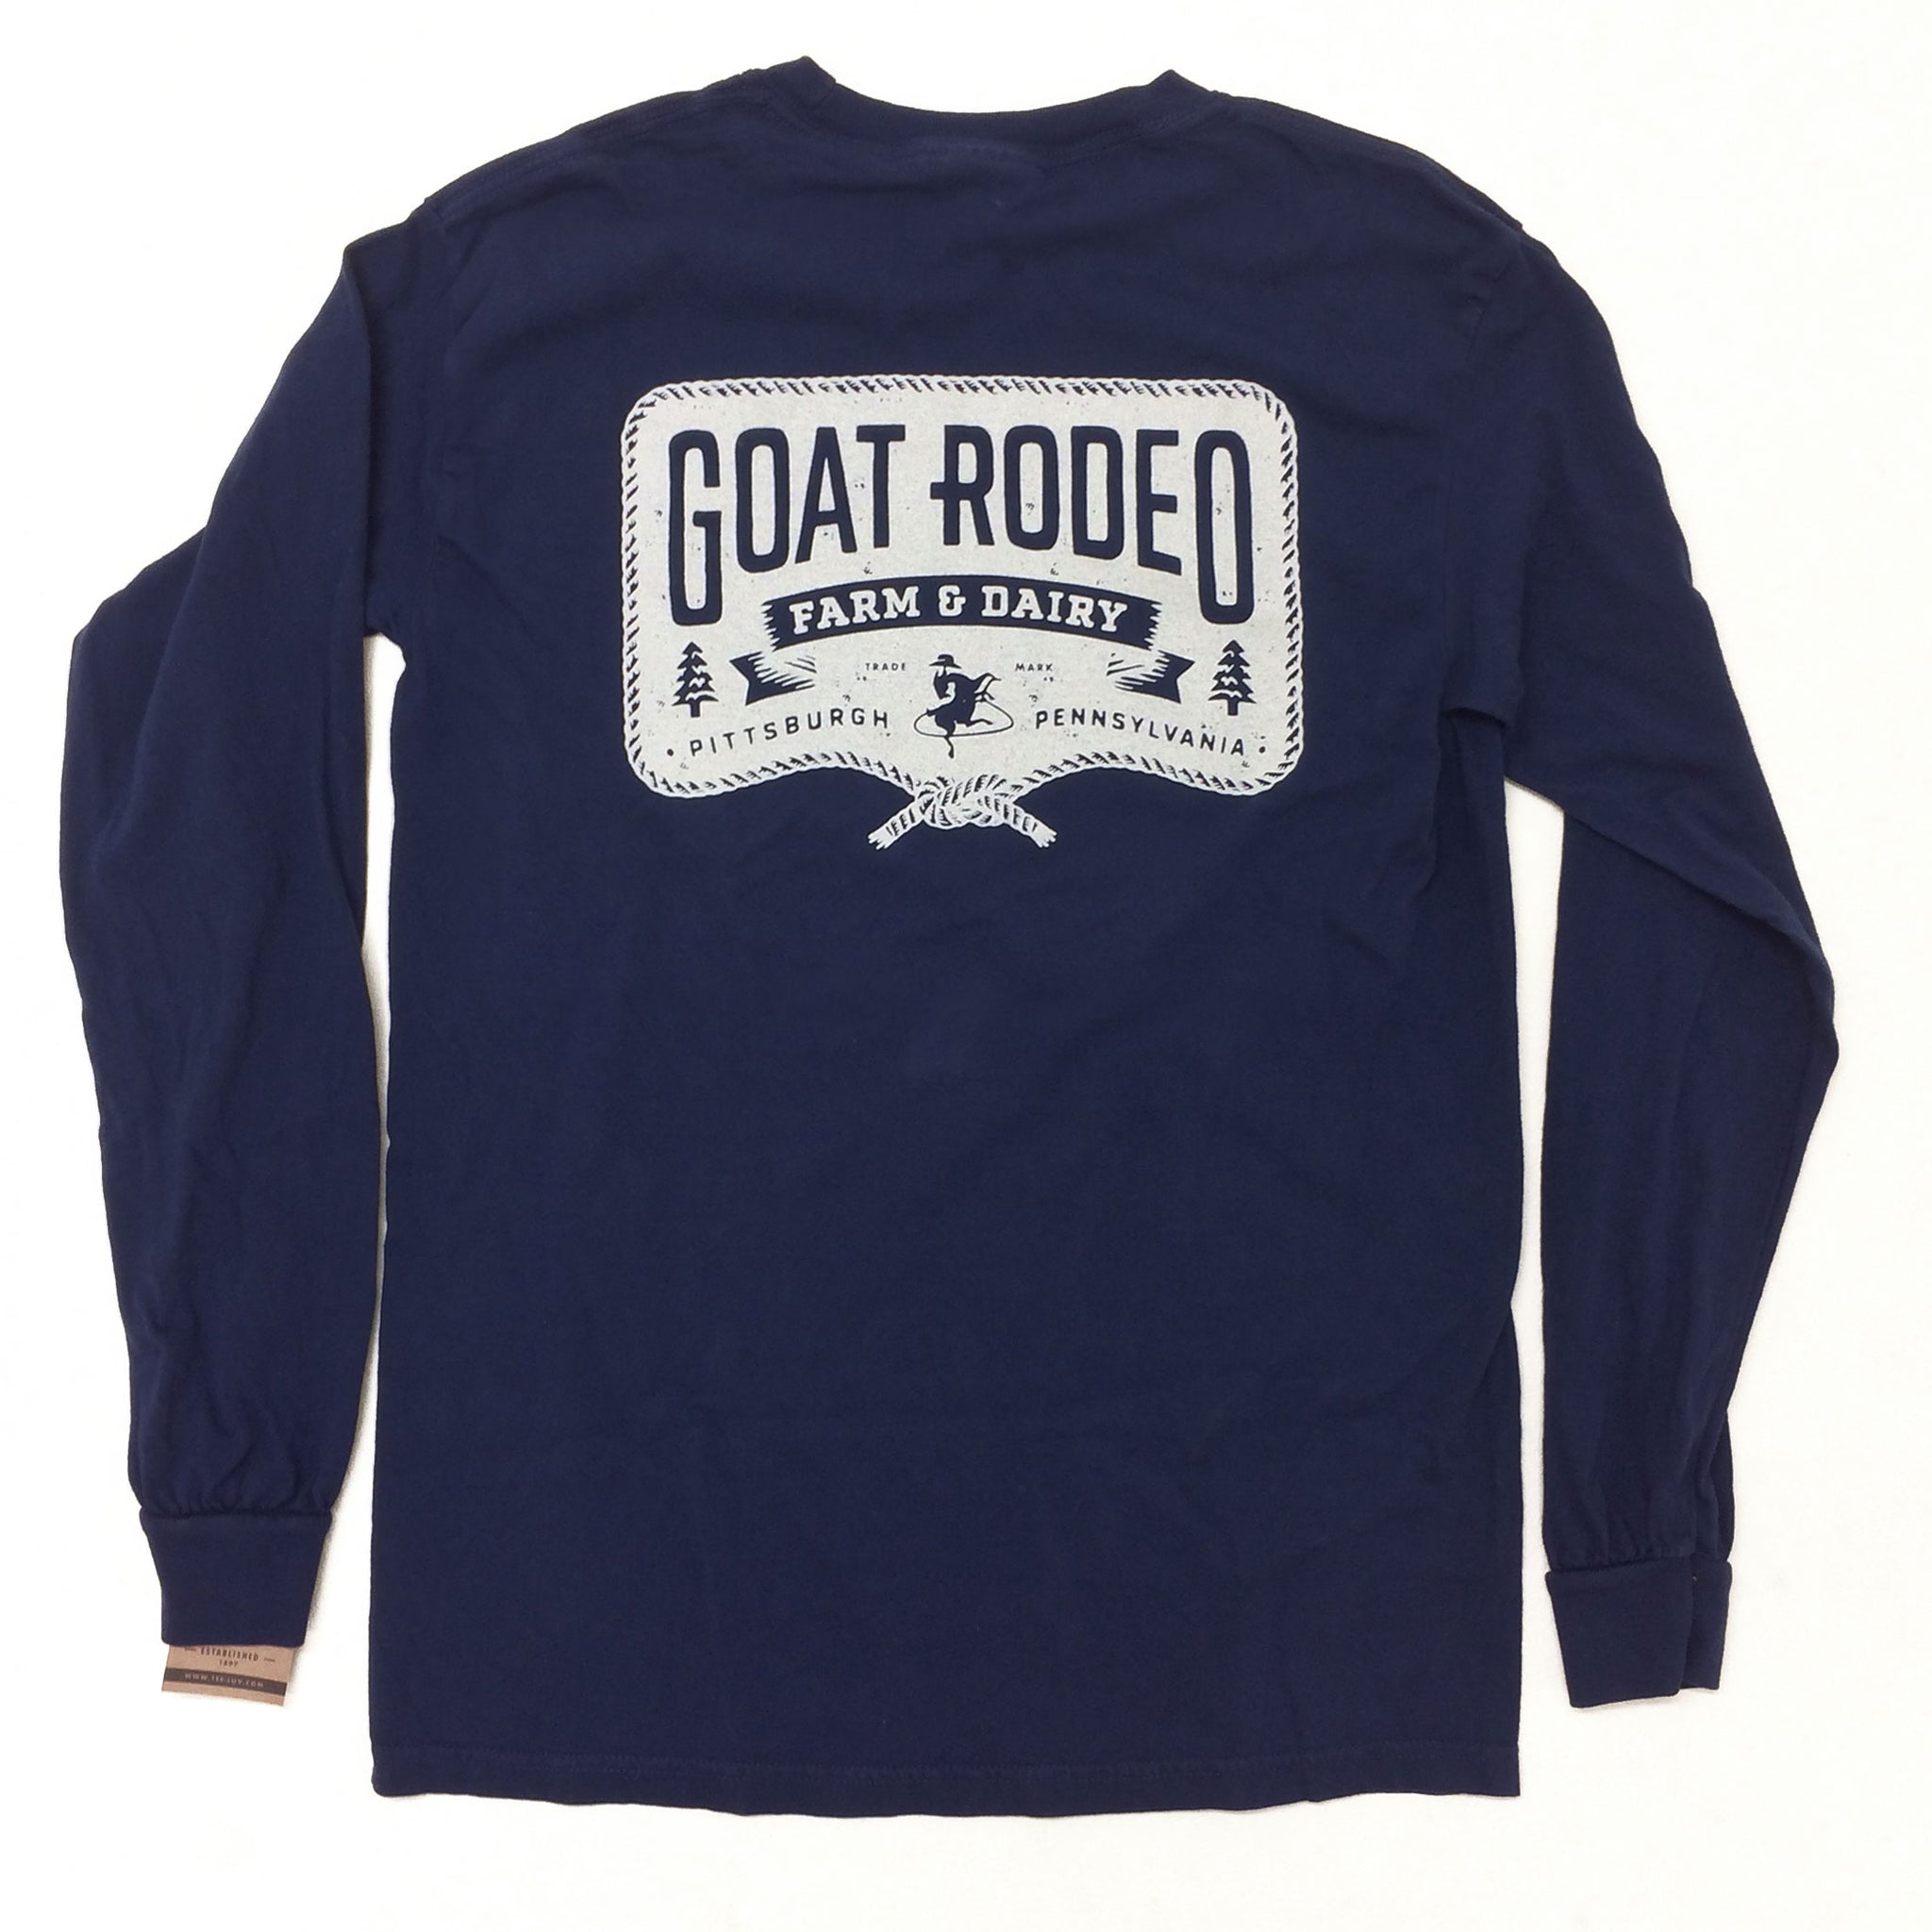 Goat Rodeo Long Sleeve Tee - Navy